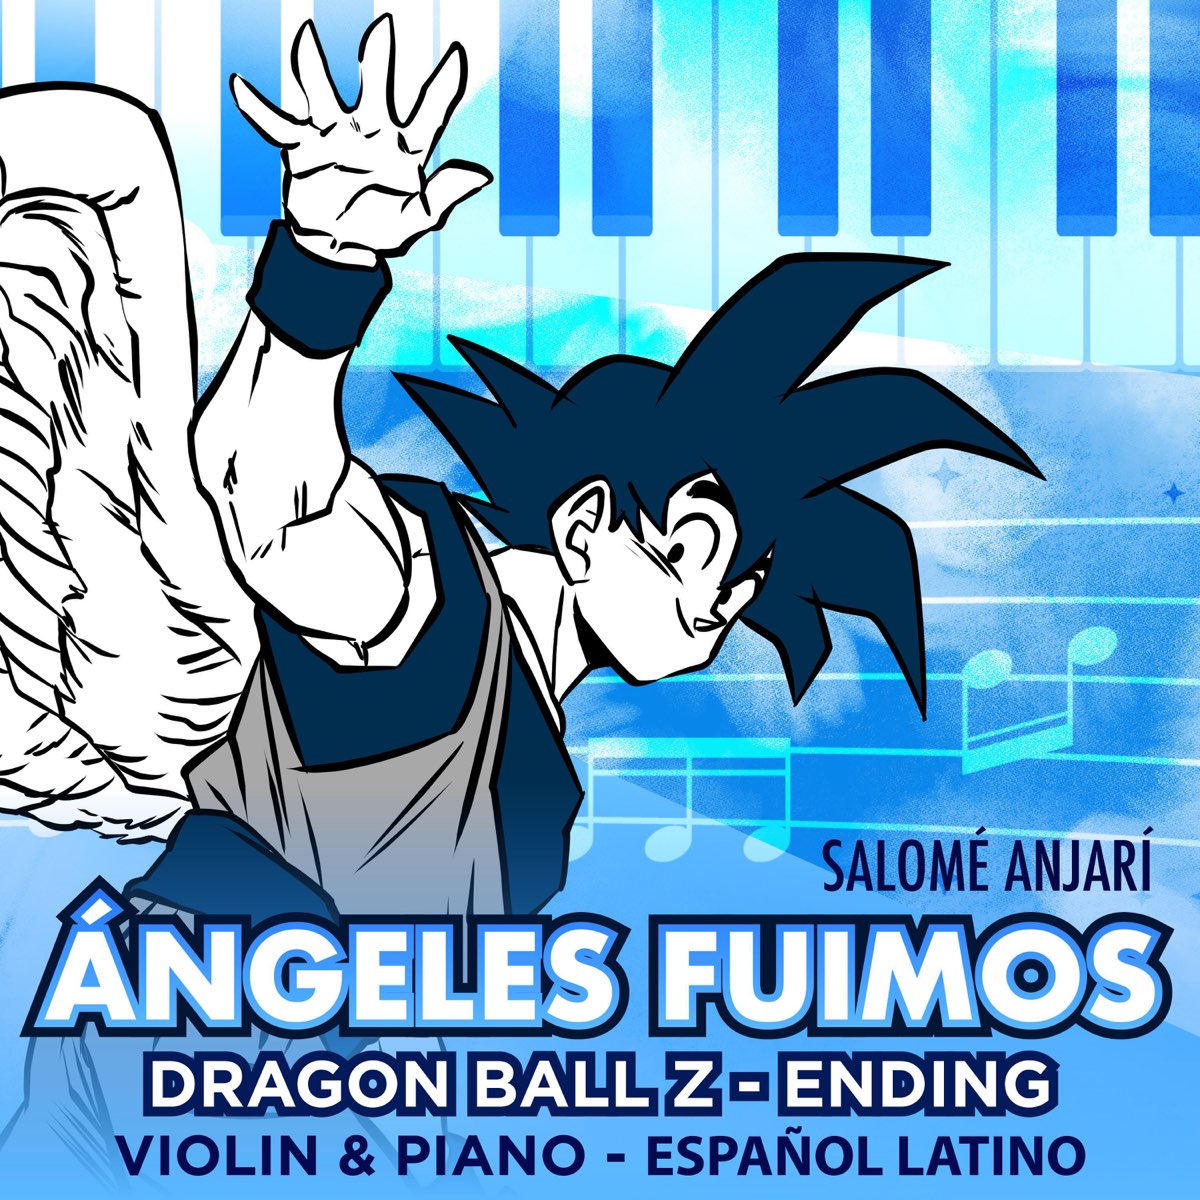 Ángeles Fuimos (Dragon Ball Z Ending Violín & Piano - Español Latino) -  Single – álbum de Salomé Anjarí – Apple Music